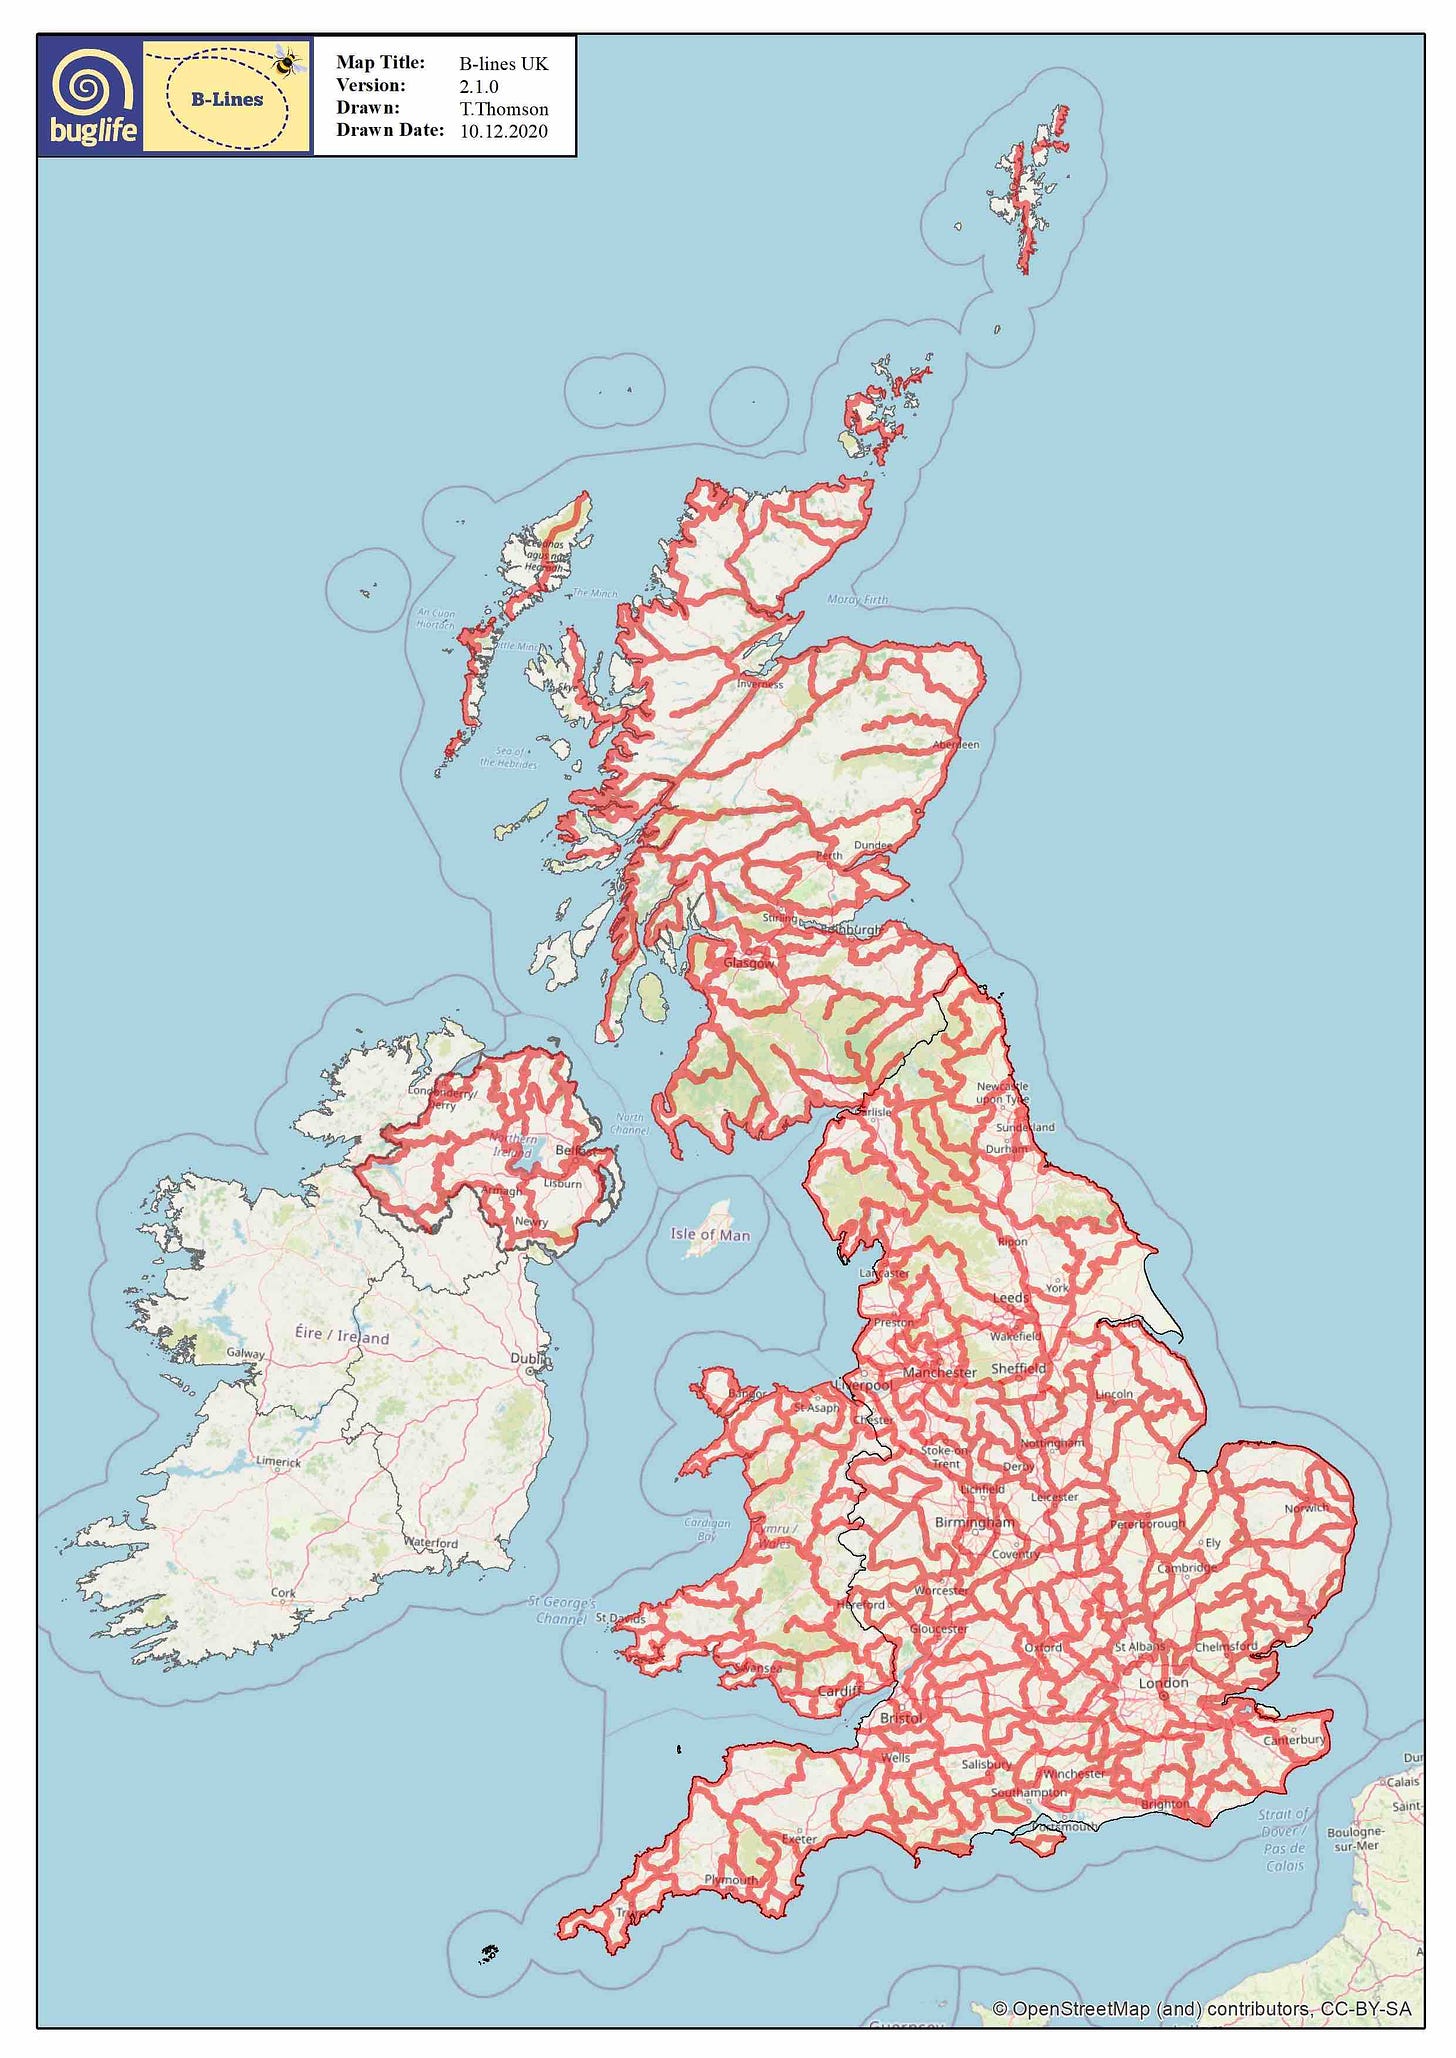 B-Lines network, Buglife UK